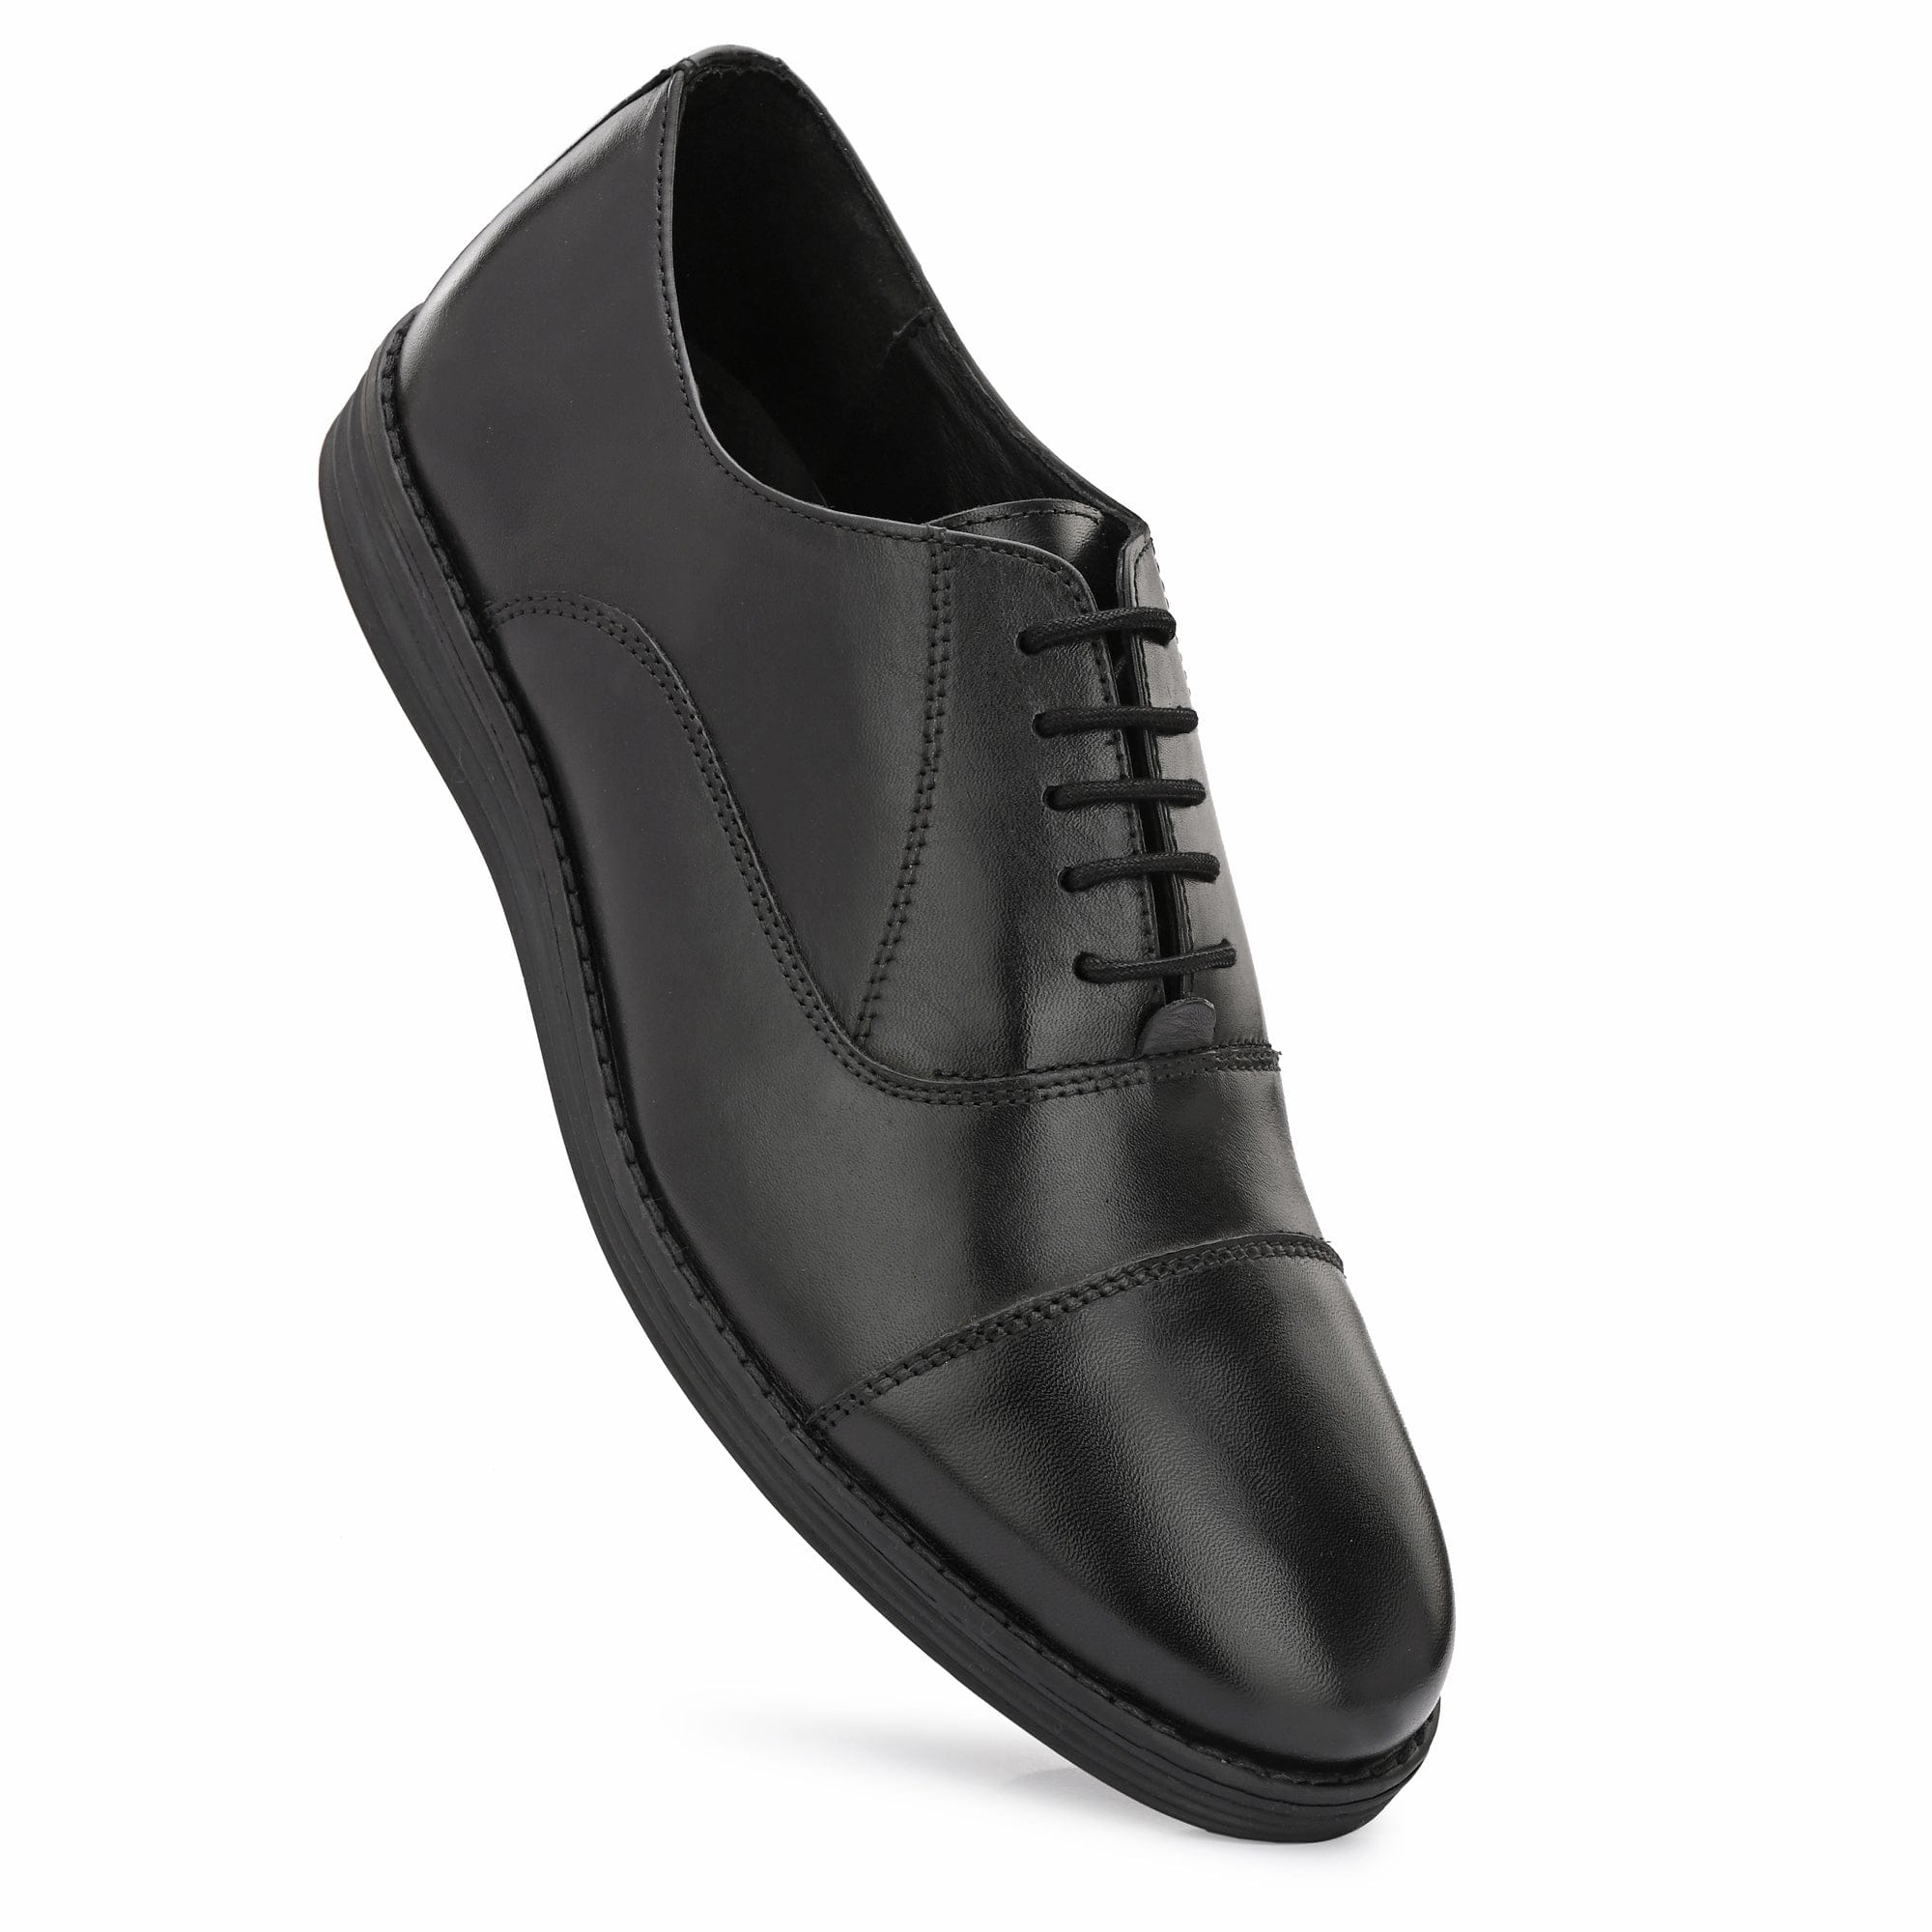 Legwork Oxford 2.0 Black Italian Leather Shoes